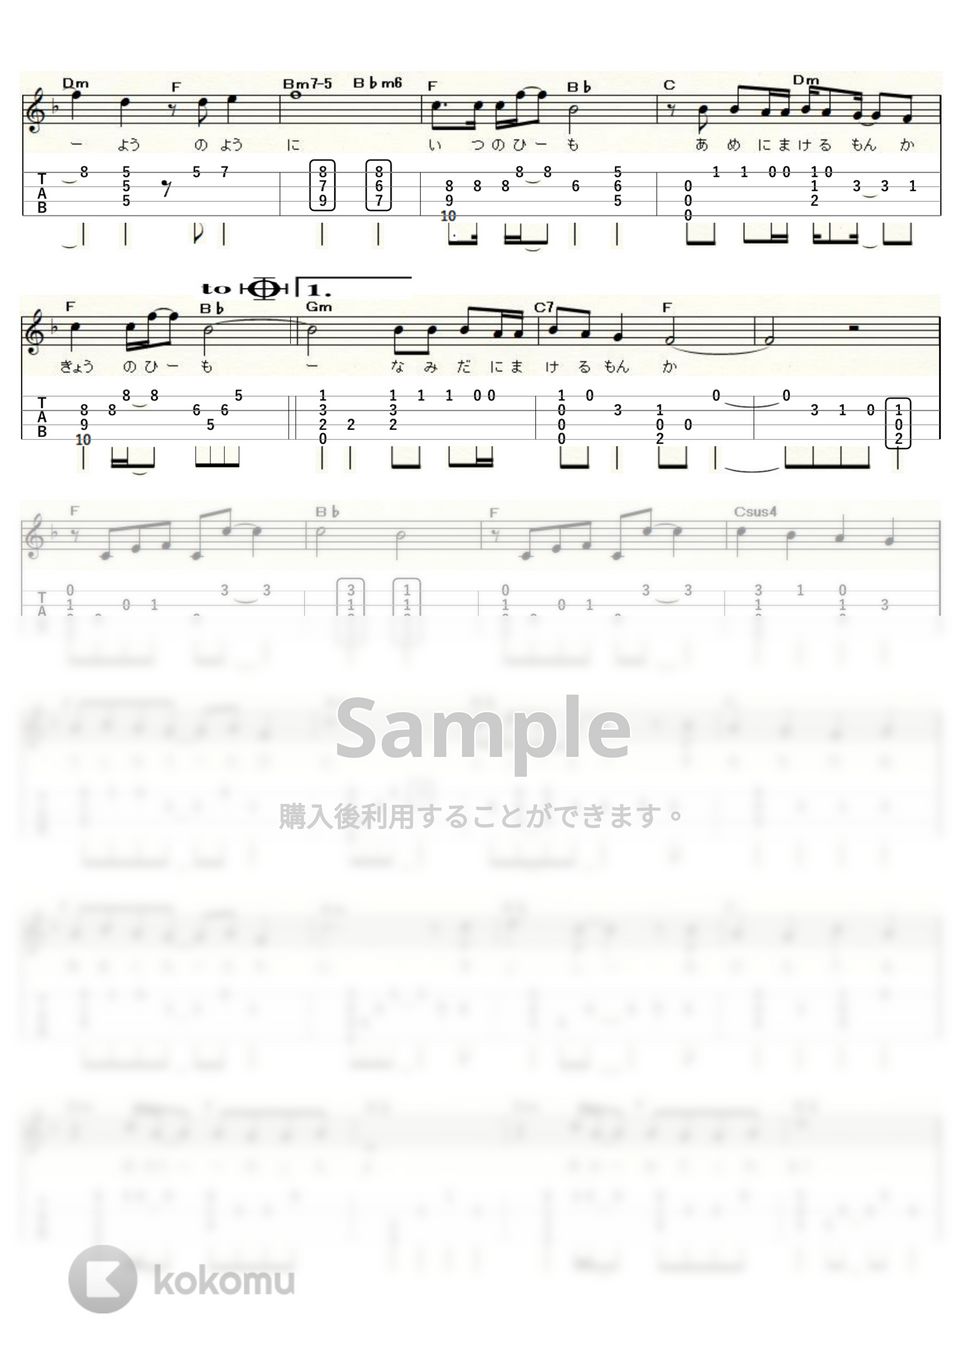 Superfly - フレア (ｳｸﾚﾚｿﾛ / High-G・Low-G / 中級) by ukulelepapa